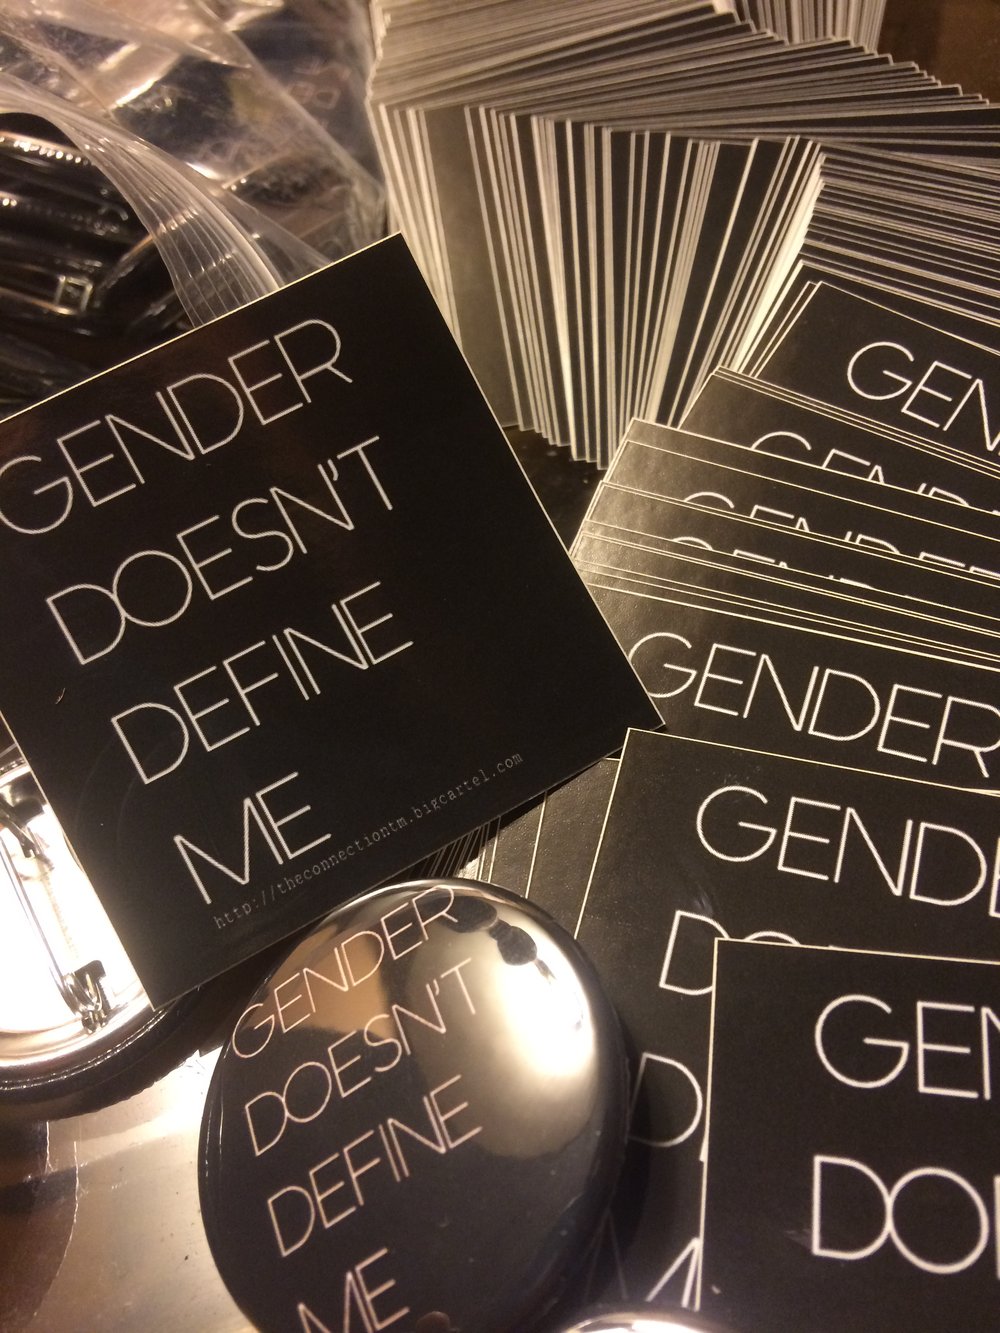 Gender doesn't define me  stickers